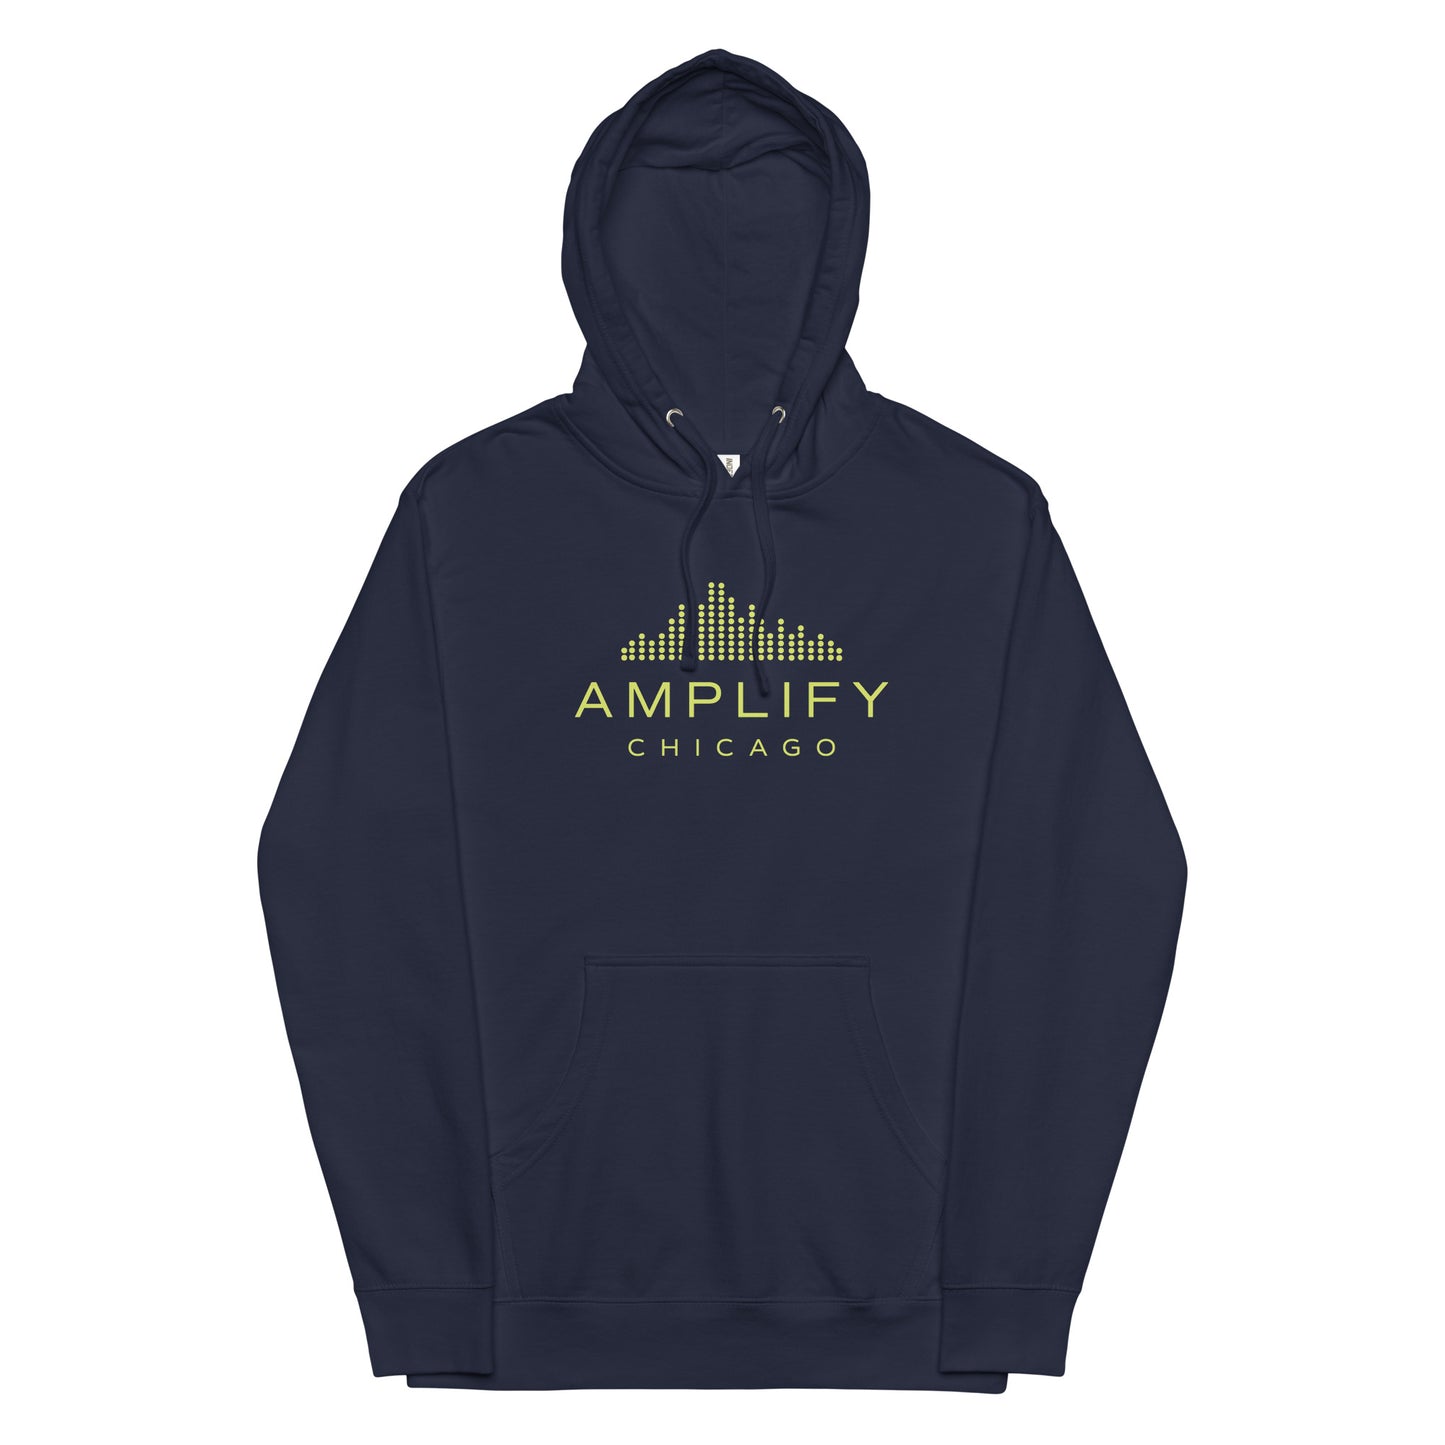 Amplify Logo + Talent Amplified | Unisex hoodie